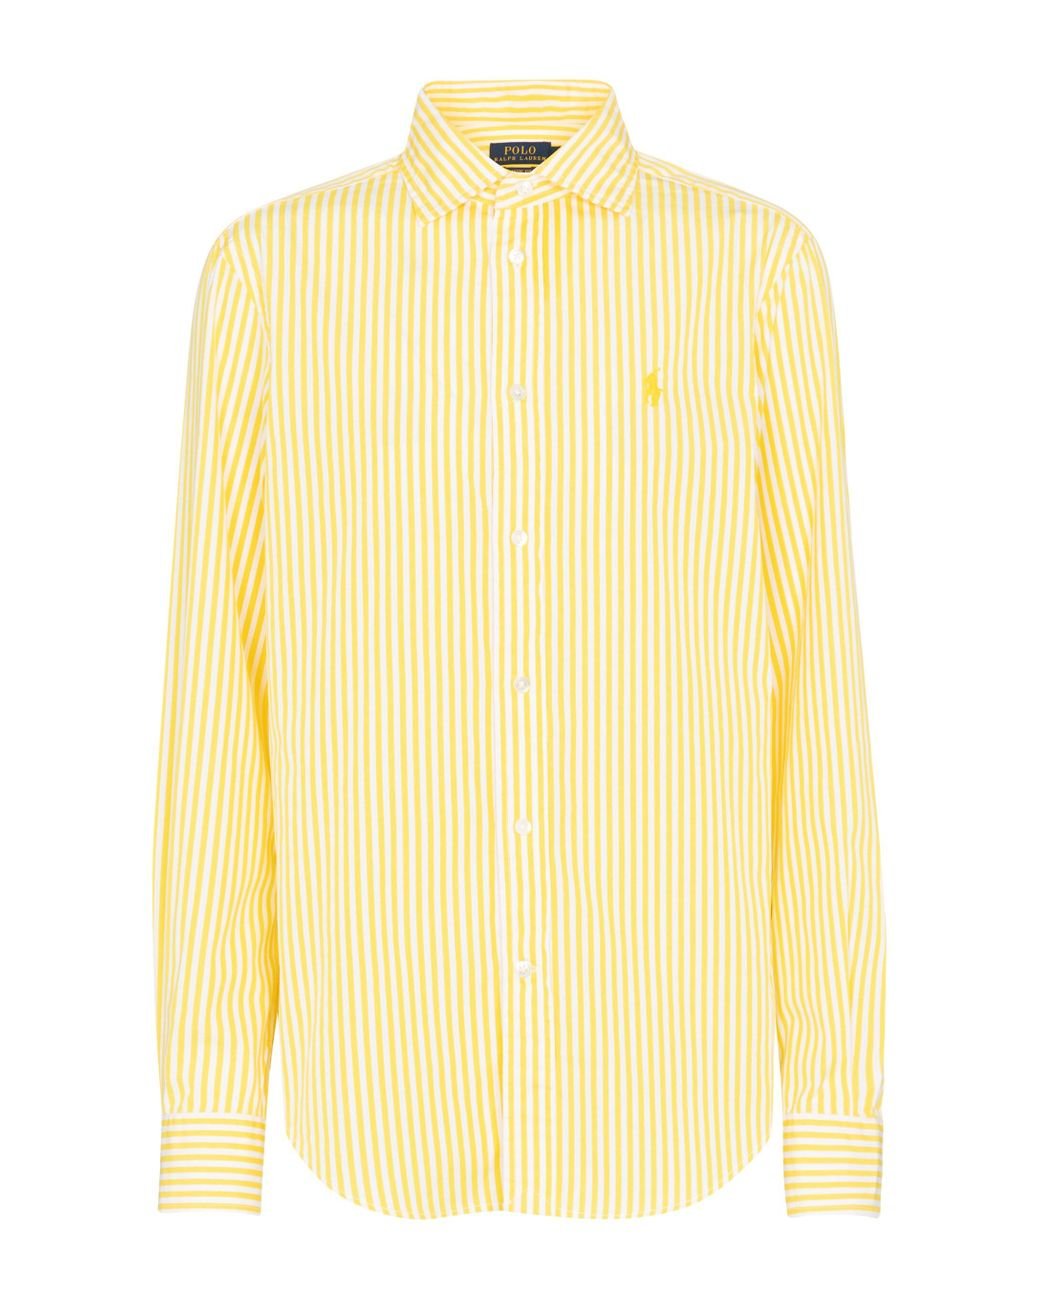 Polo Ralph Lauren Striped Cotton Shirt in Yellow - Lyst